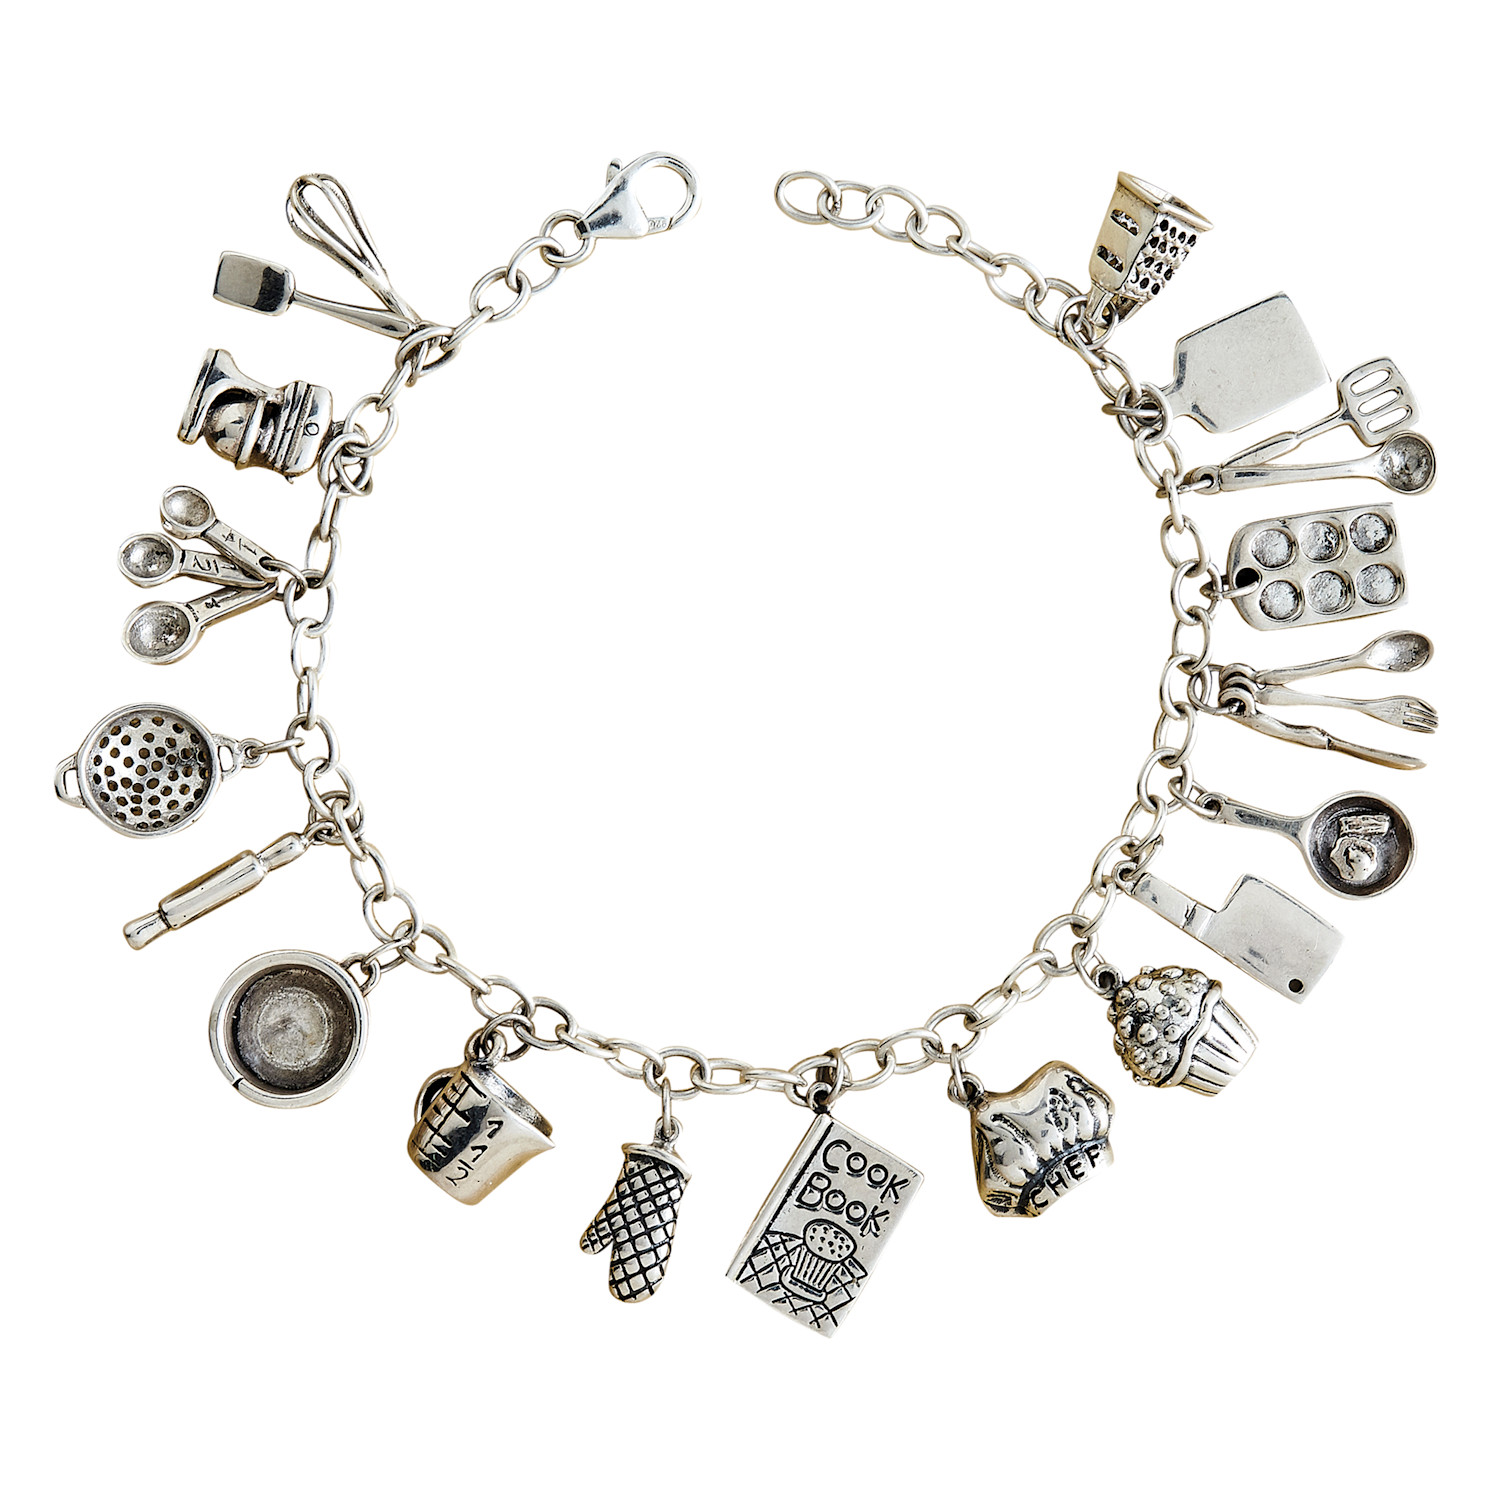 SALE PRICE TV Show Central Park Friends Charm Bracelet Birthday Gift 